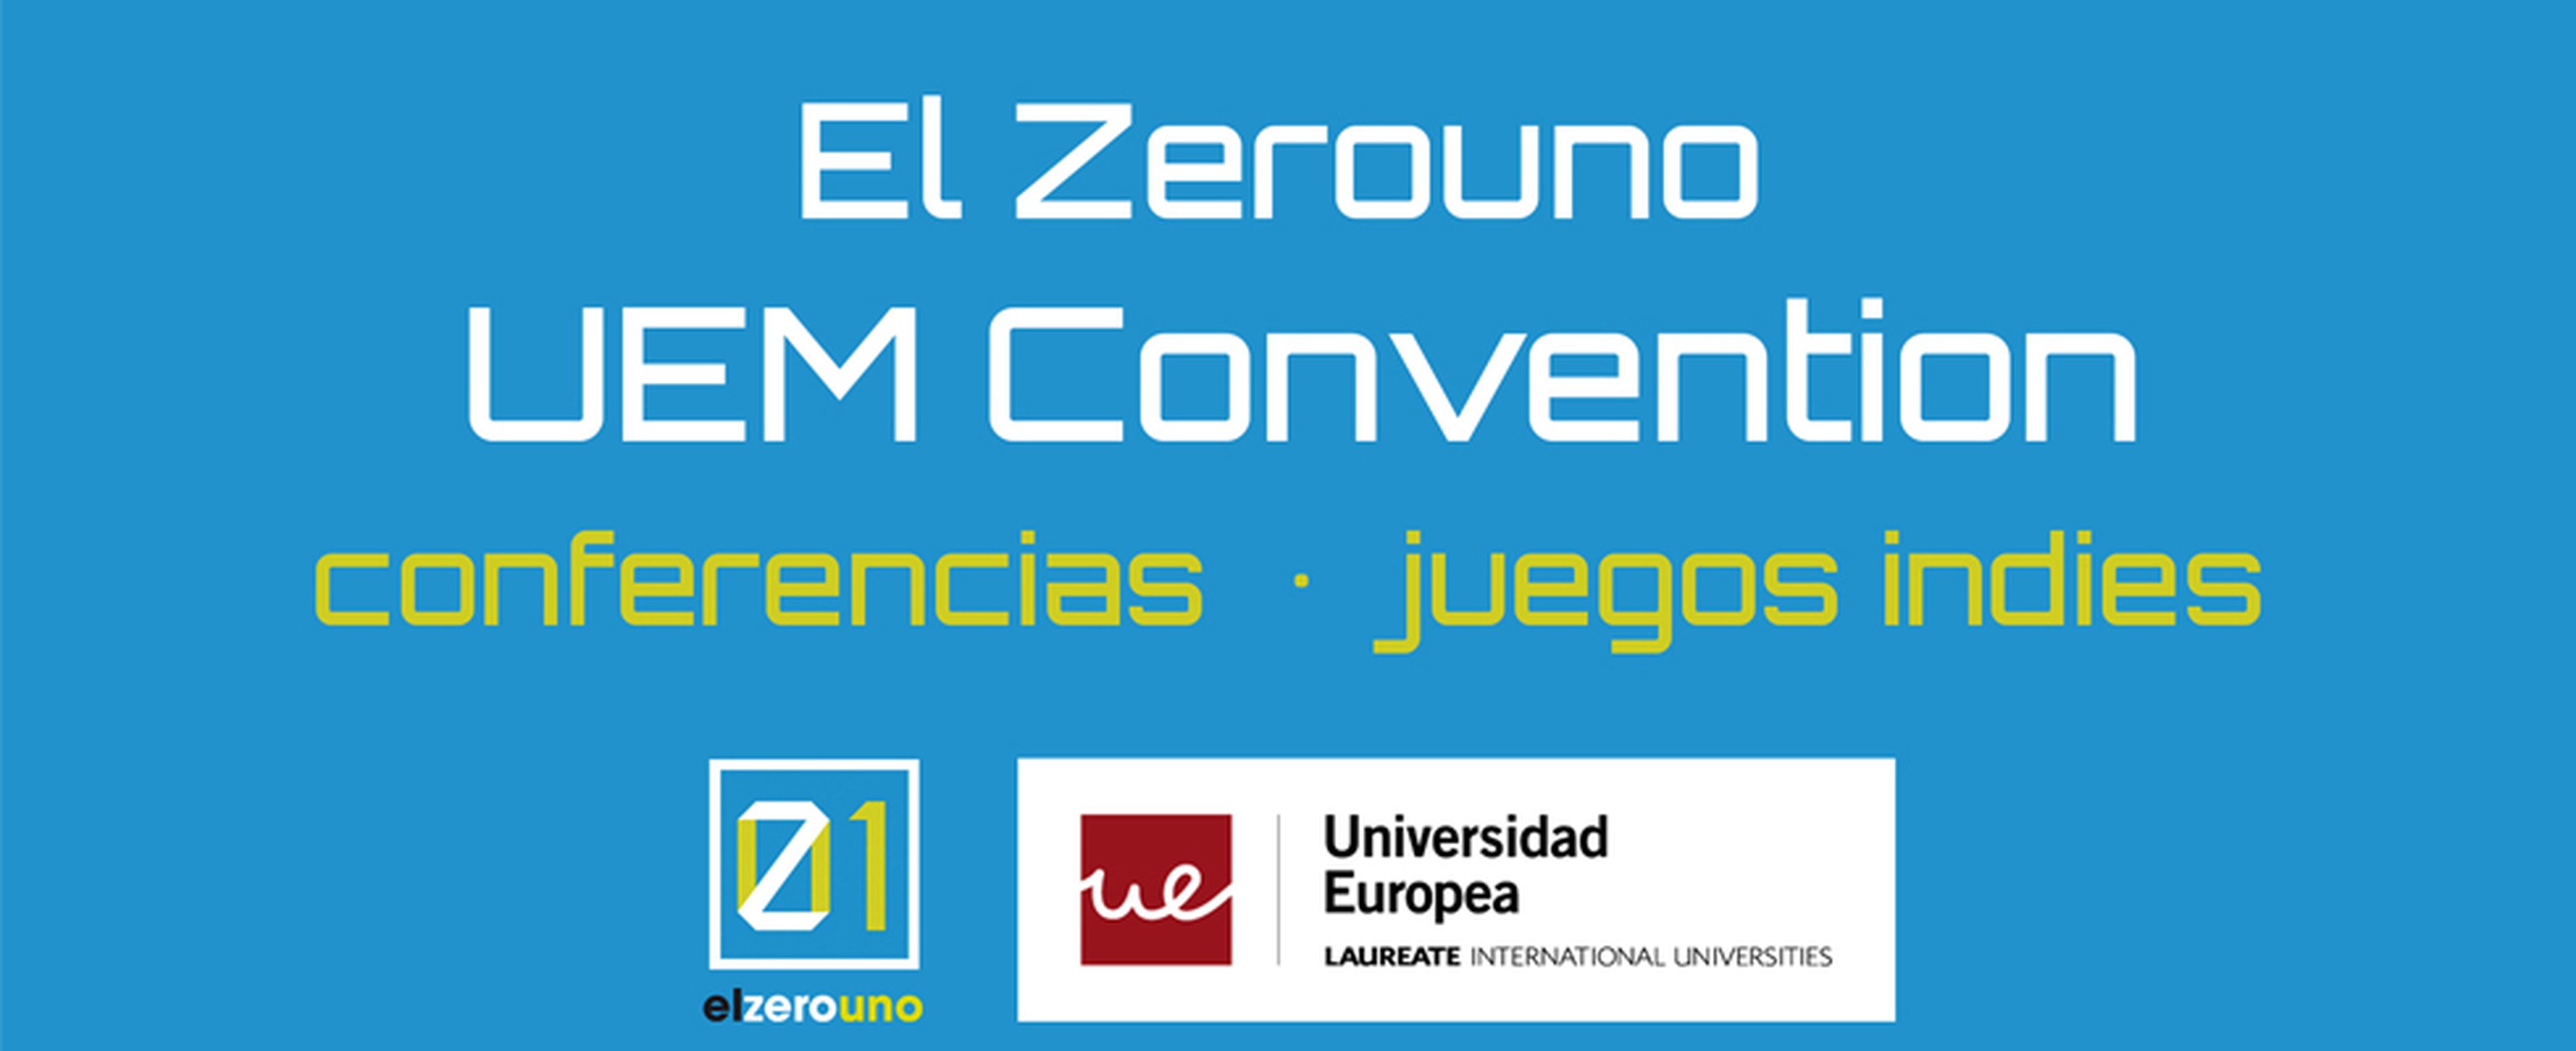 El Zerouno UEM Convention cabecera